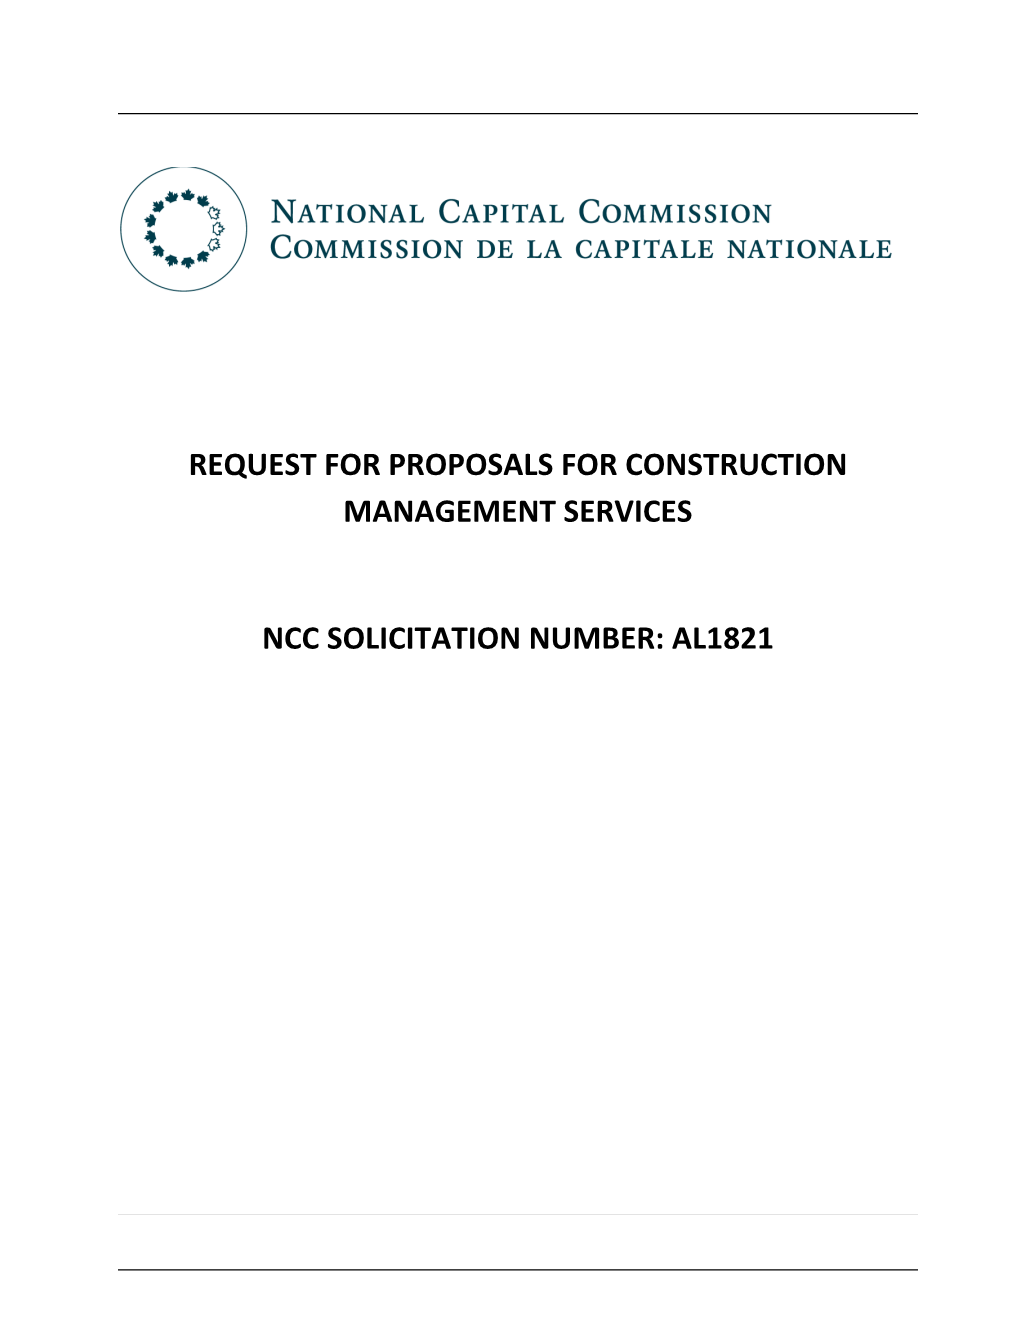 Request for Proposals for Construction Management Services